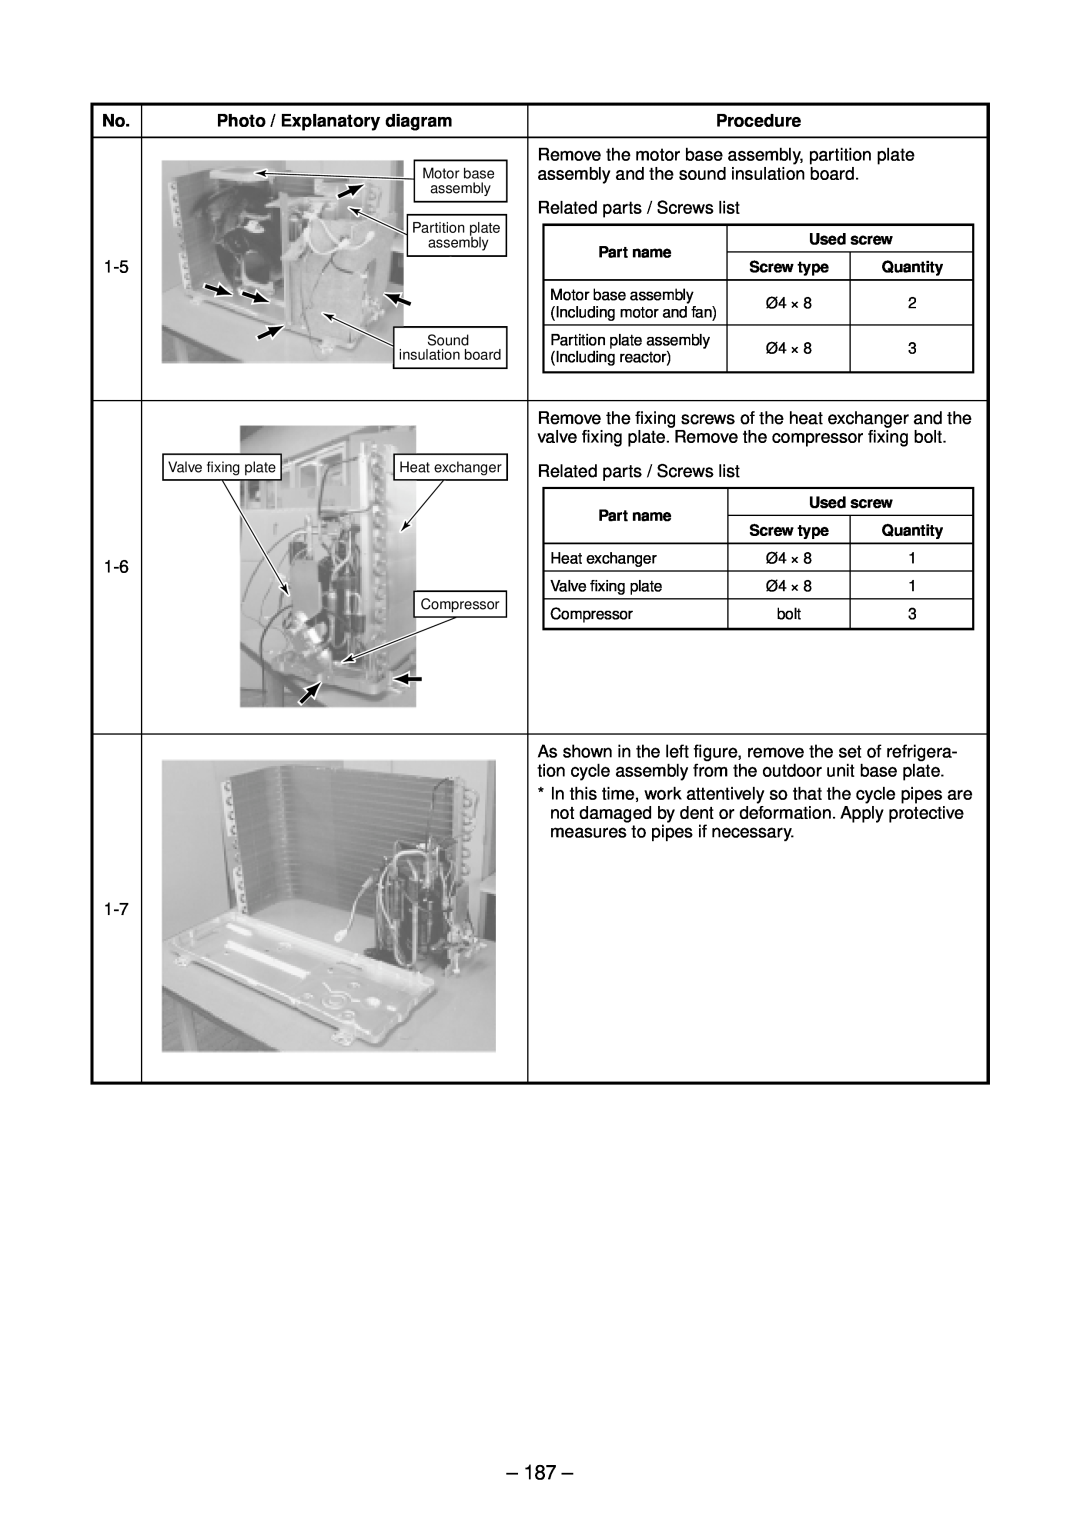 Toshiba RAV-SM1402BT-E Photo / Explanatory diagram, Procedure, Sound, insulation board, Valve fixing plate, Heat exchanger 